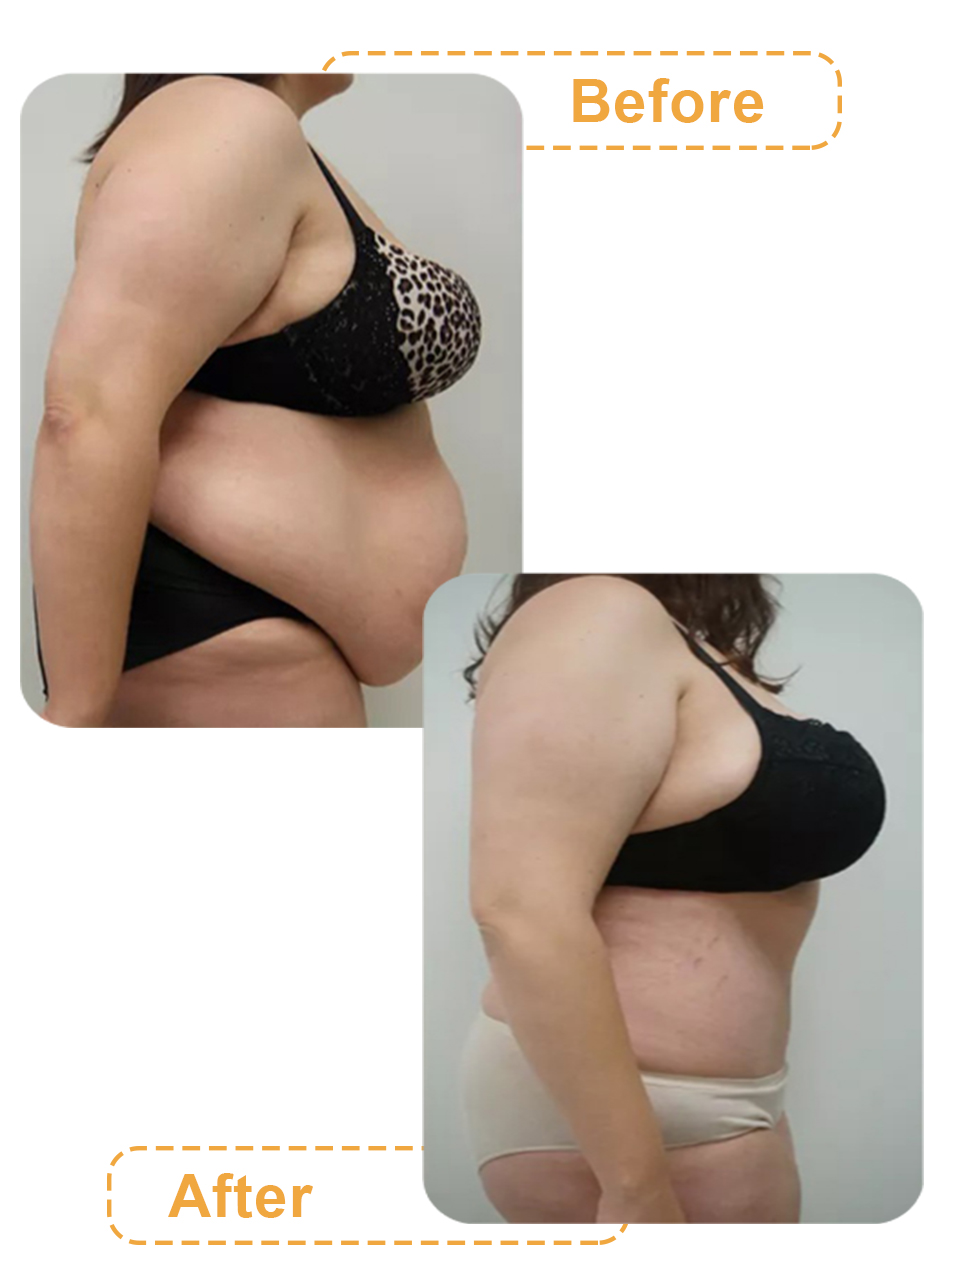 عکس های قبل و بعد عمل کوچک کردن شکم